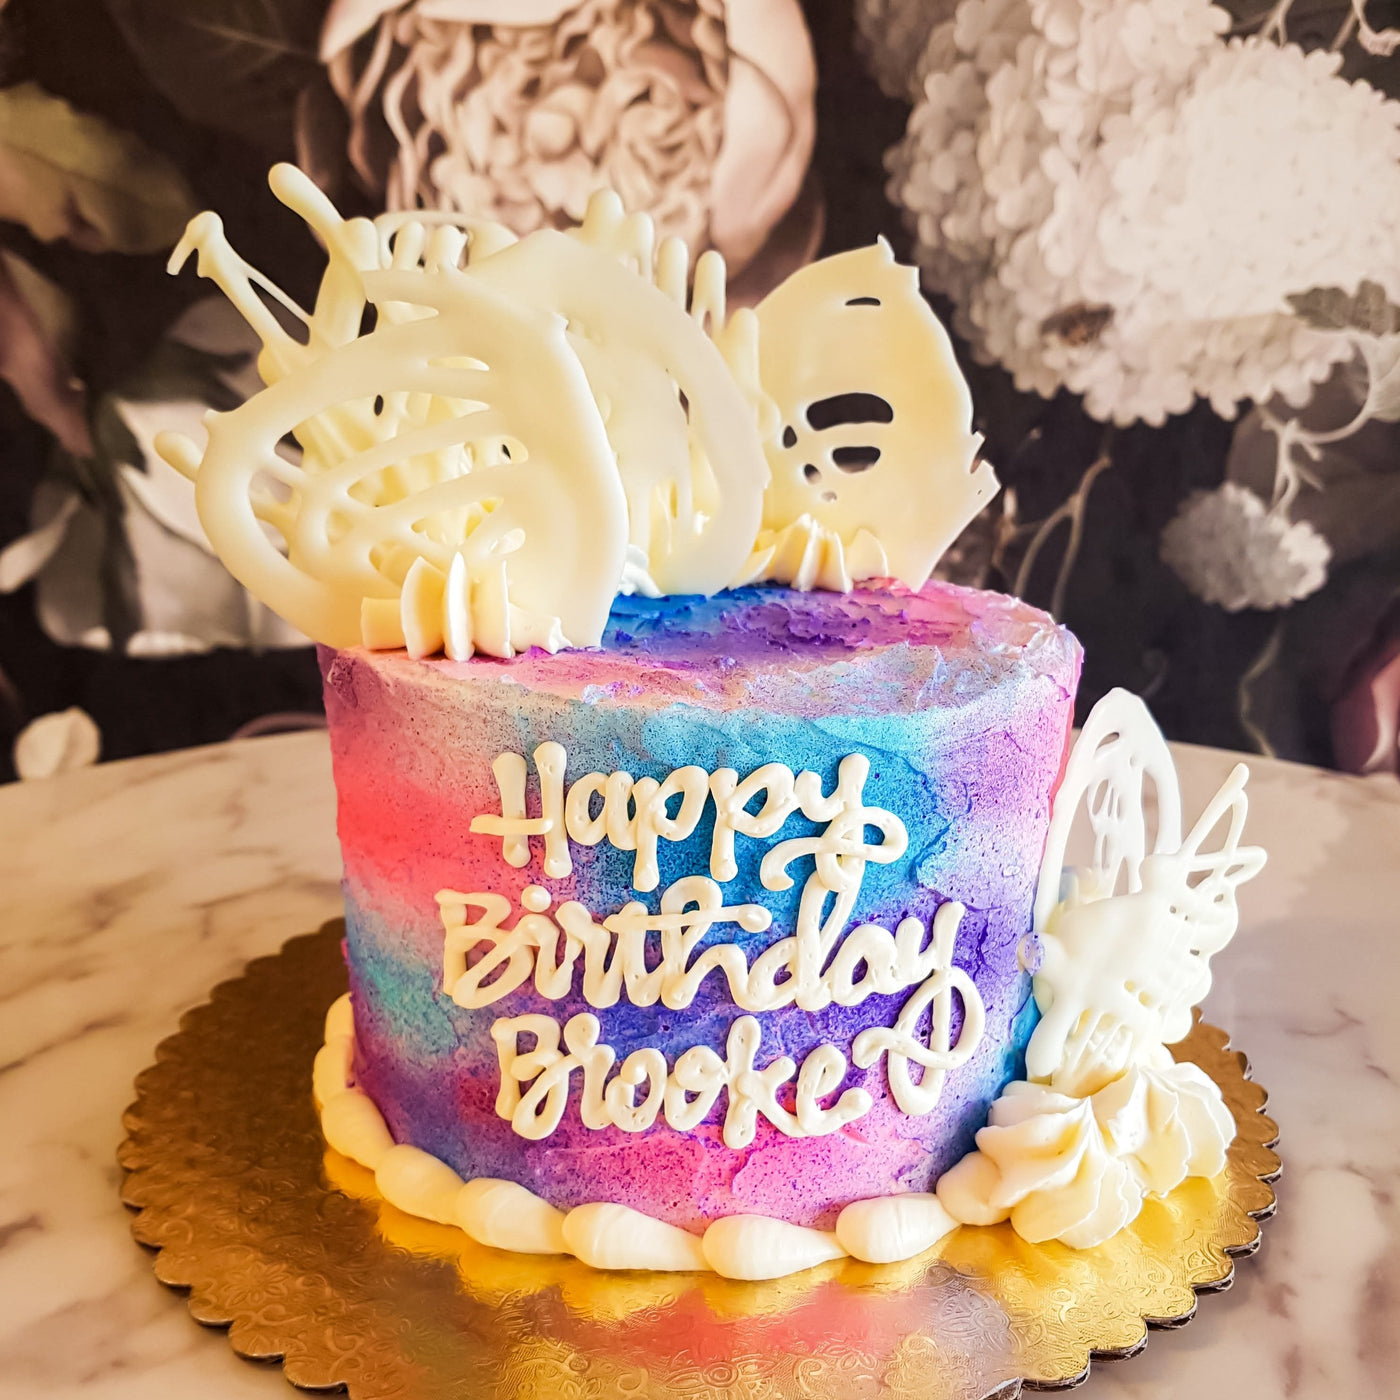 most popular cake, best gift ever, boyfriend gift, girlfriends birthday,, pink cake, purple cake, barbie colors 